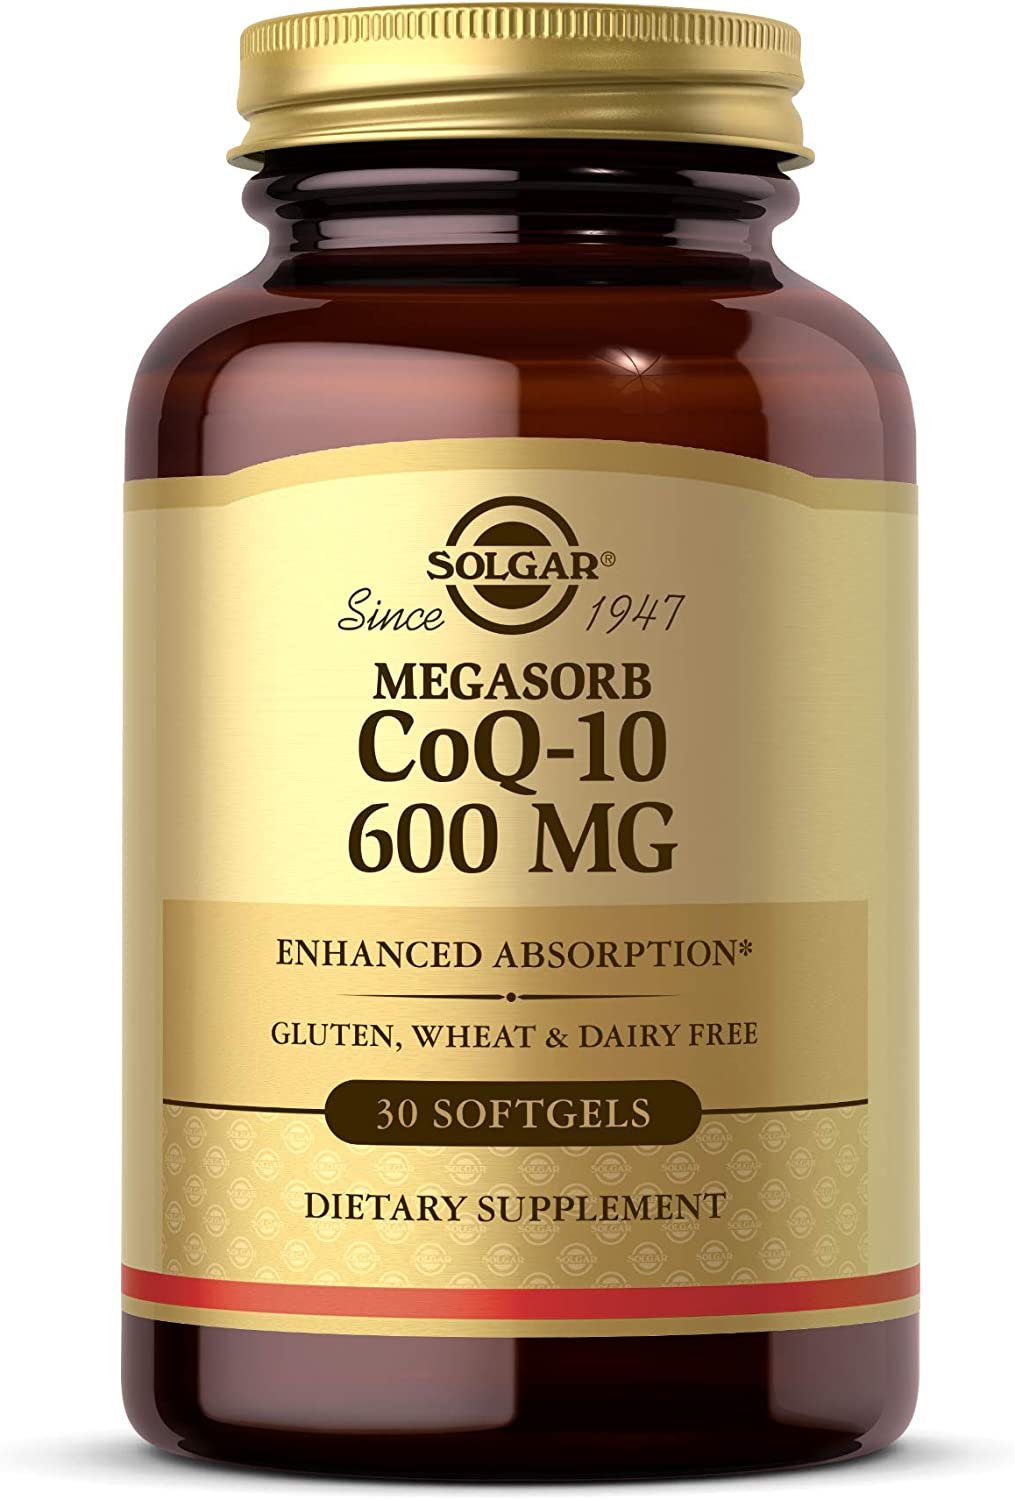 Solgar Megasorb CoQ-10 600 mg - Promotes Heart & Nervous System Health - 30 ct